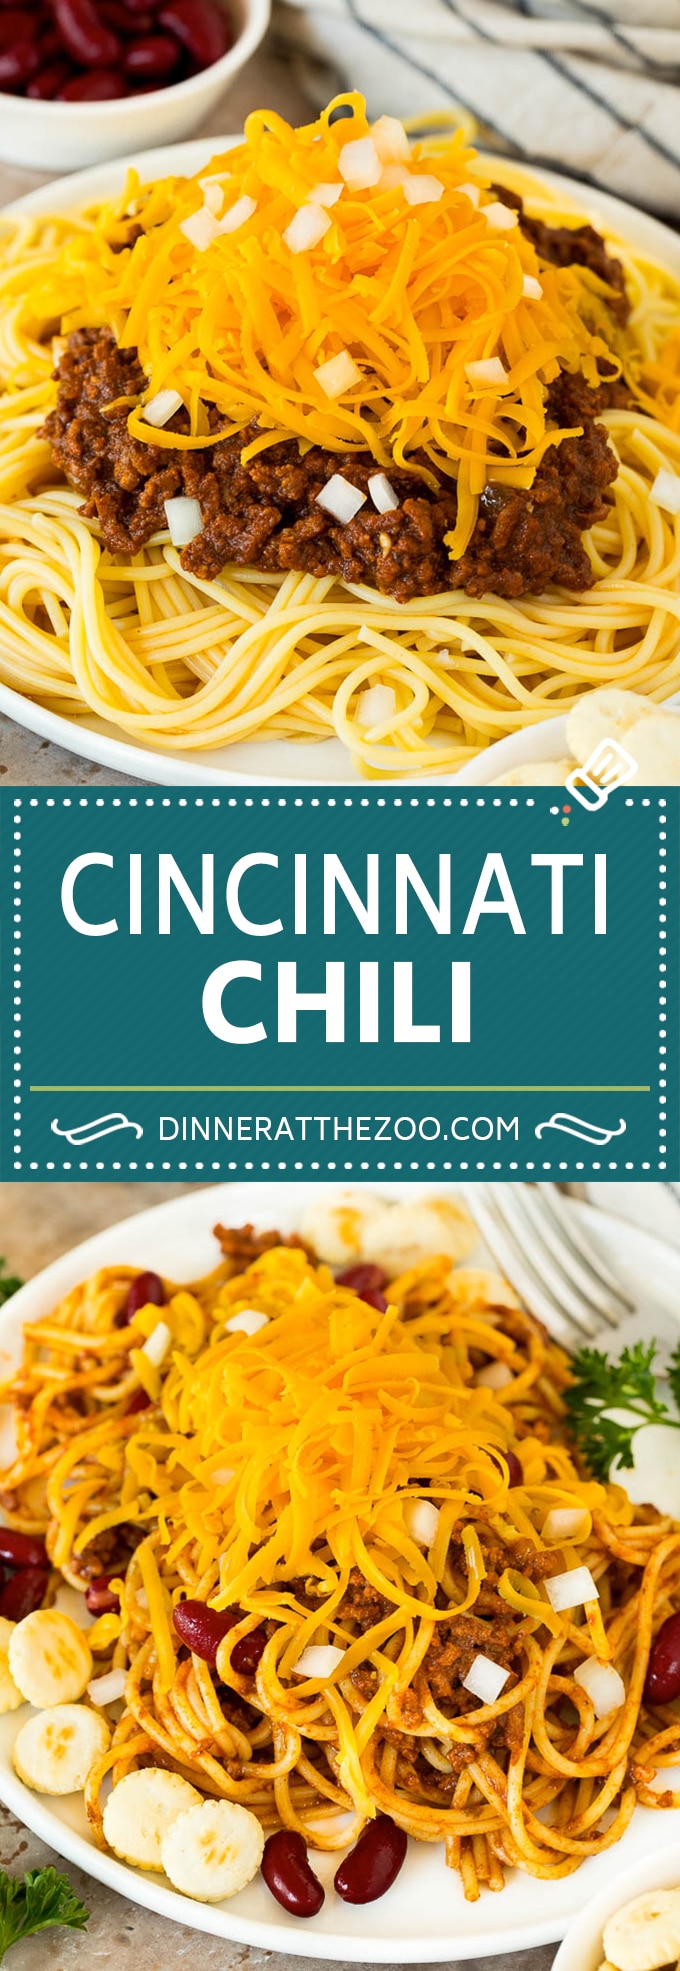 Cincinnati Chili Recipe - Dinner at the Zoo